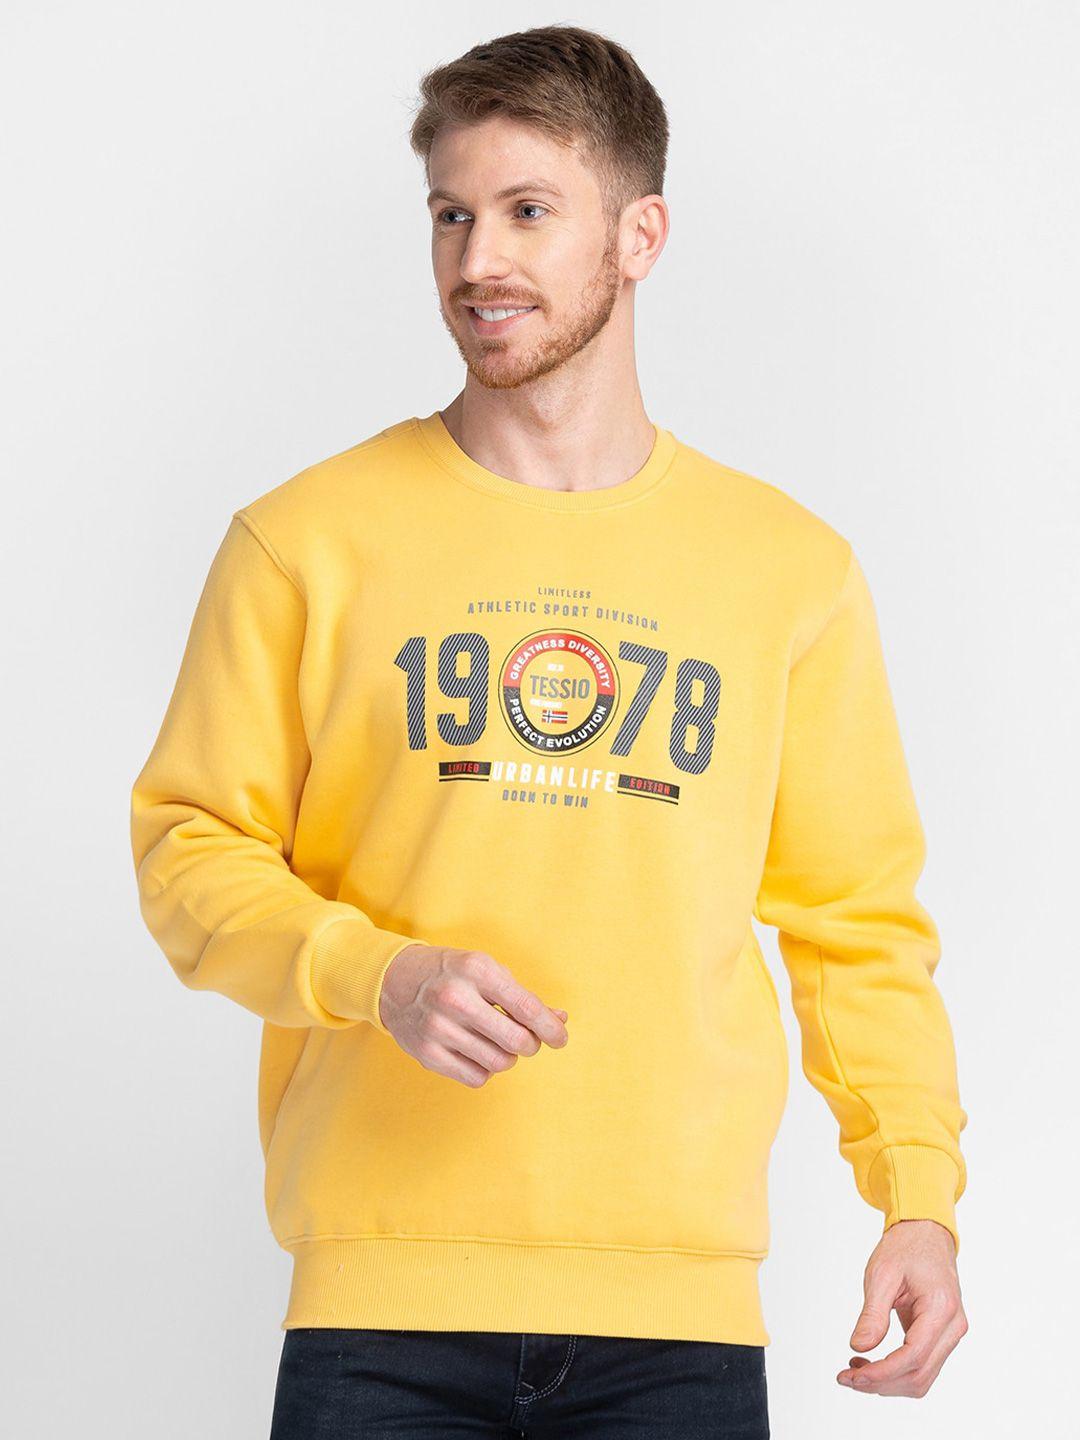 tessio-men-yellow-printed-sweatshirt